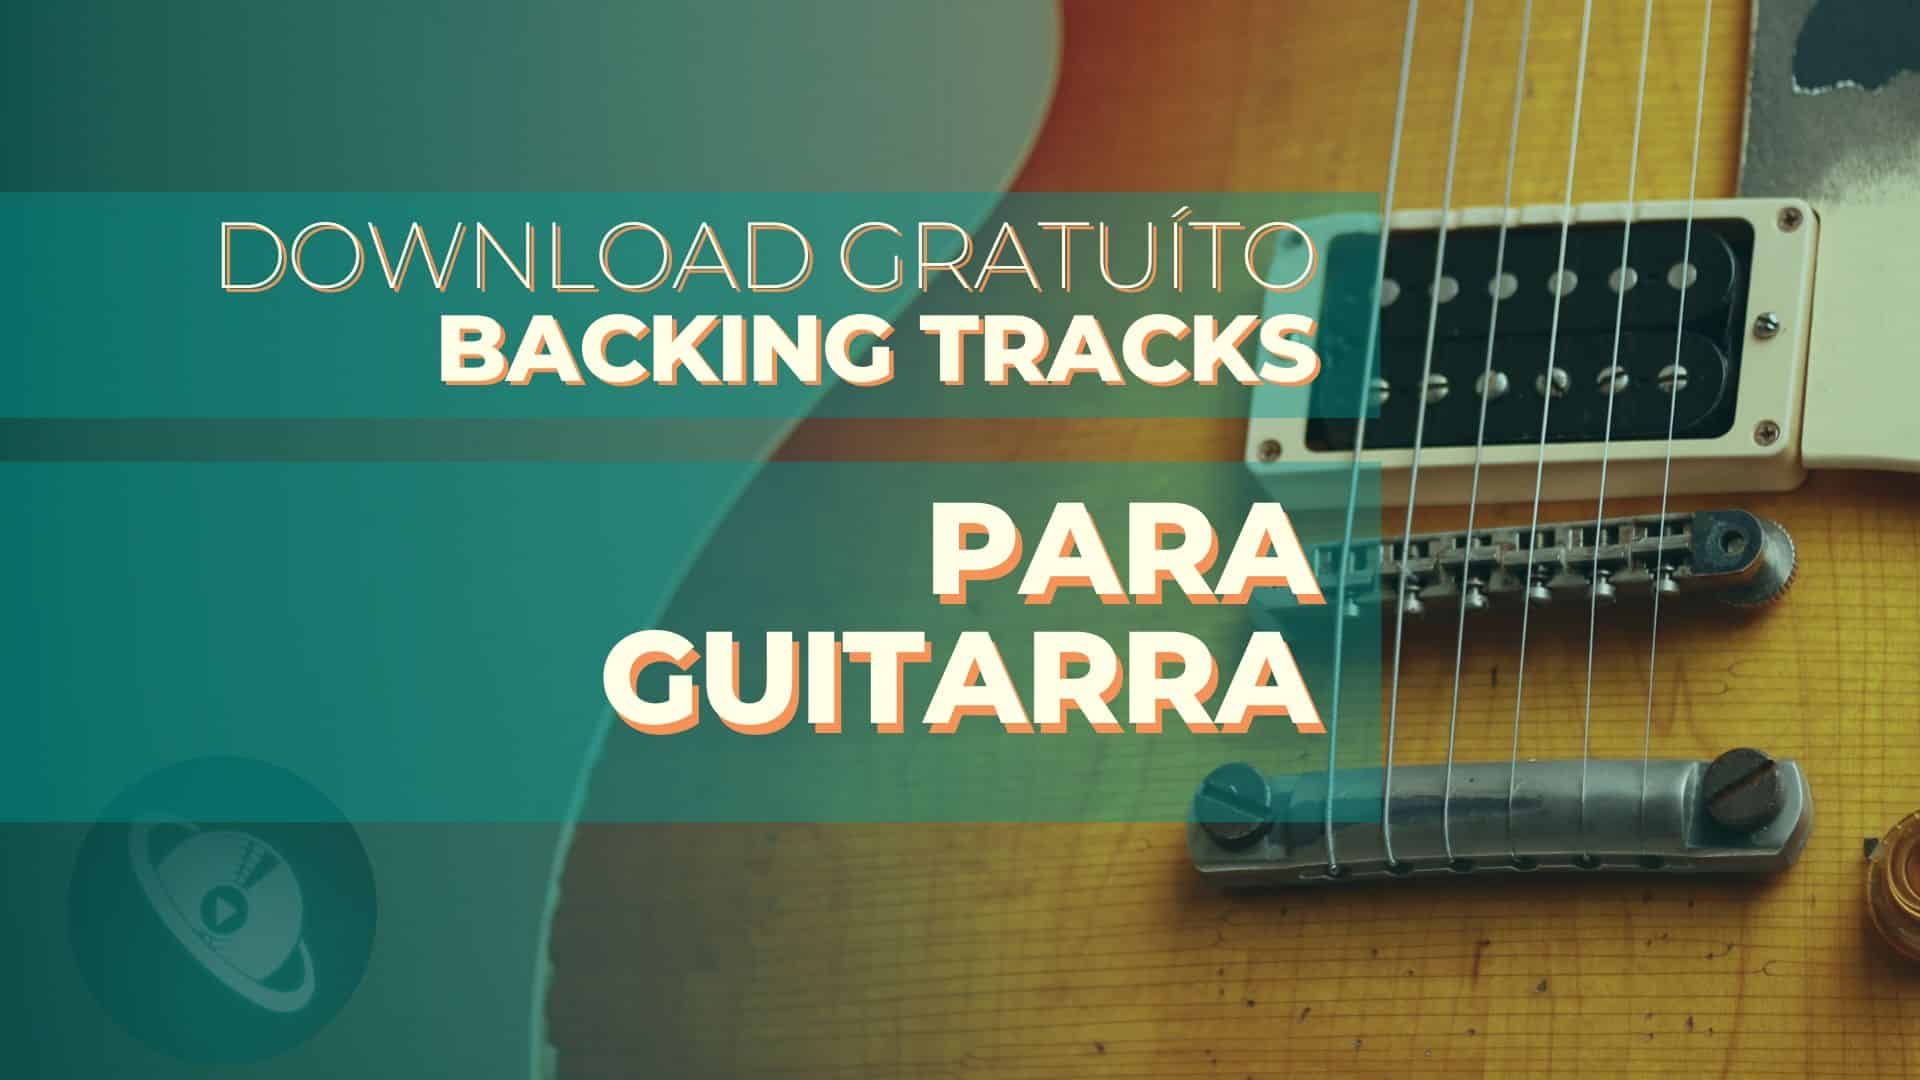 Download gratuito de Backing Tracks para guitarra.